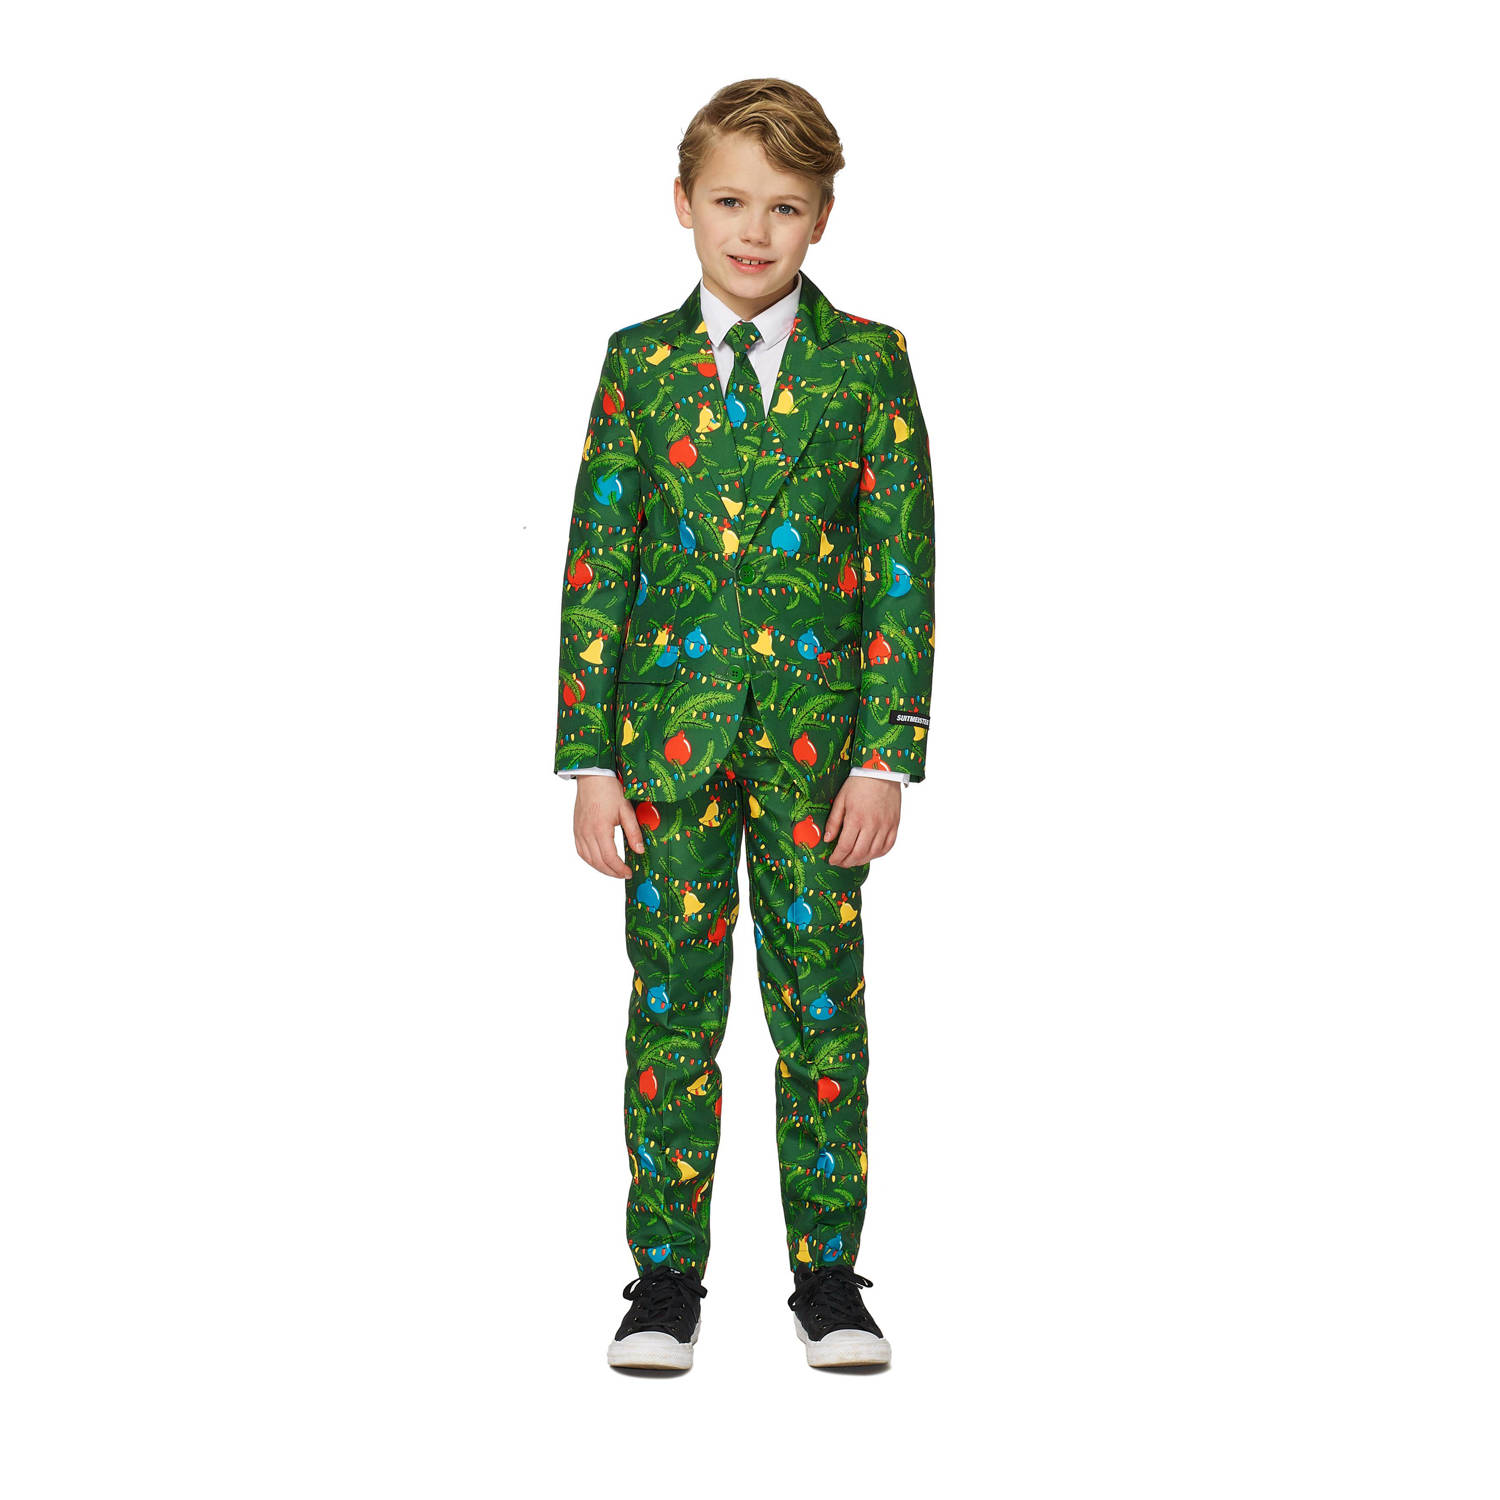 Suitmeister kostuum Christmas Green Tree Light Up groen